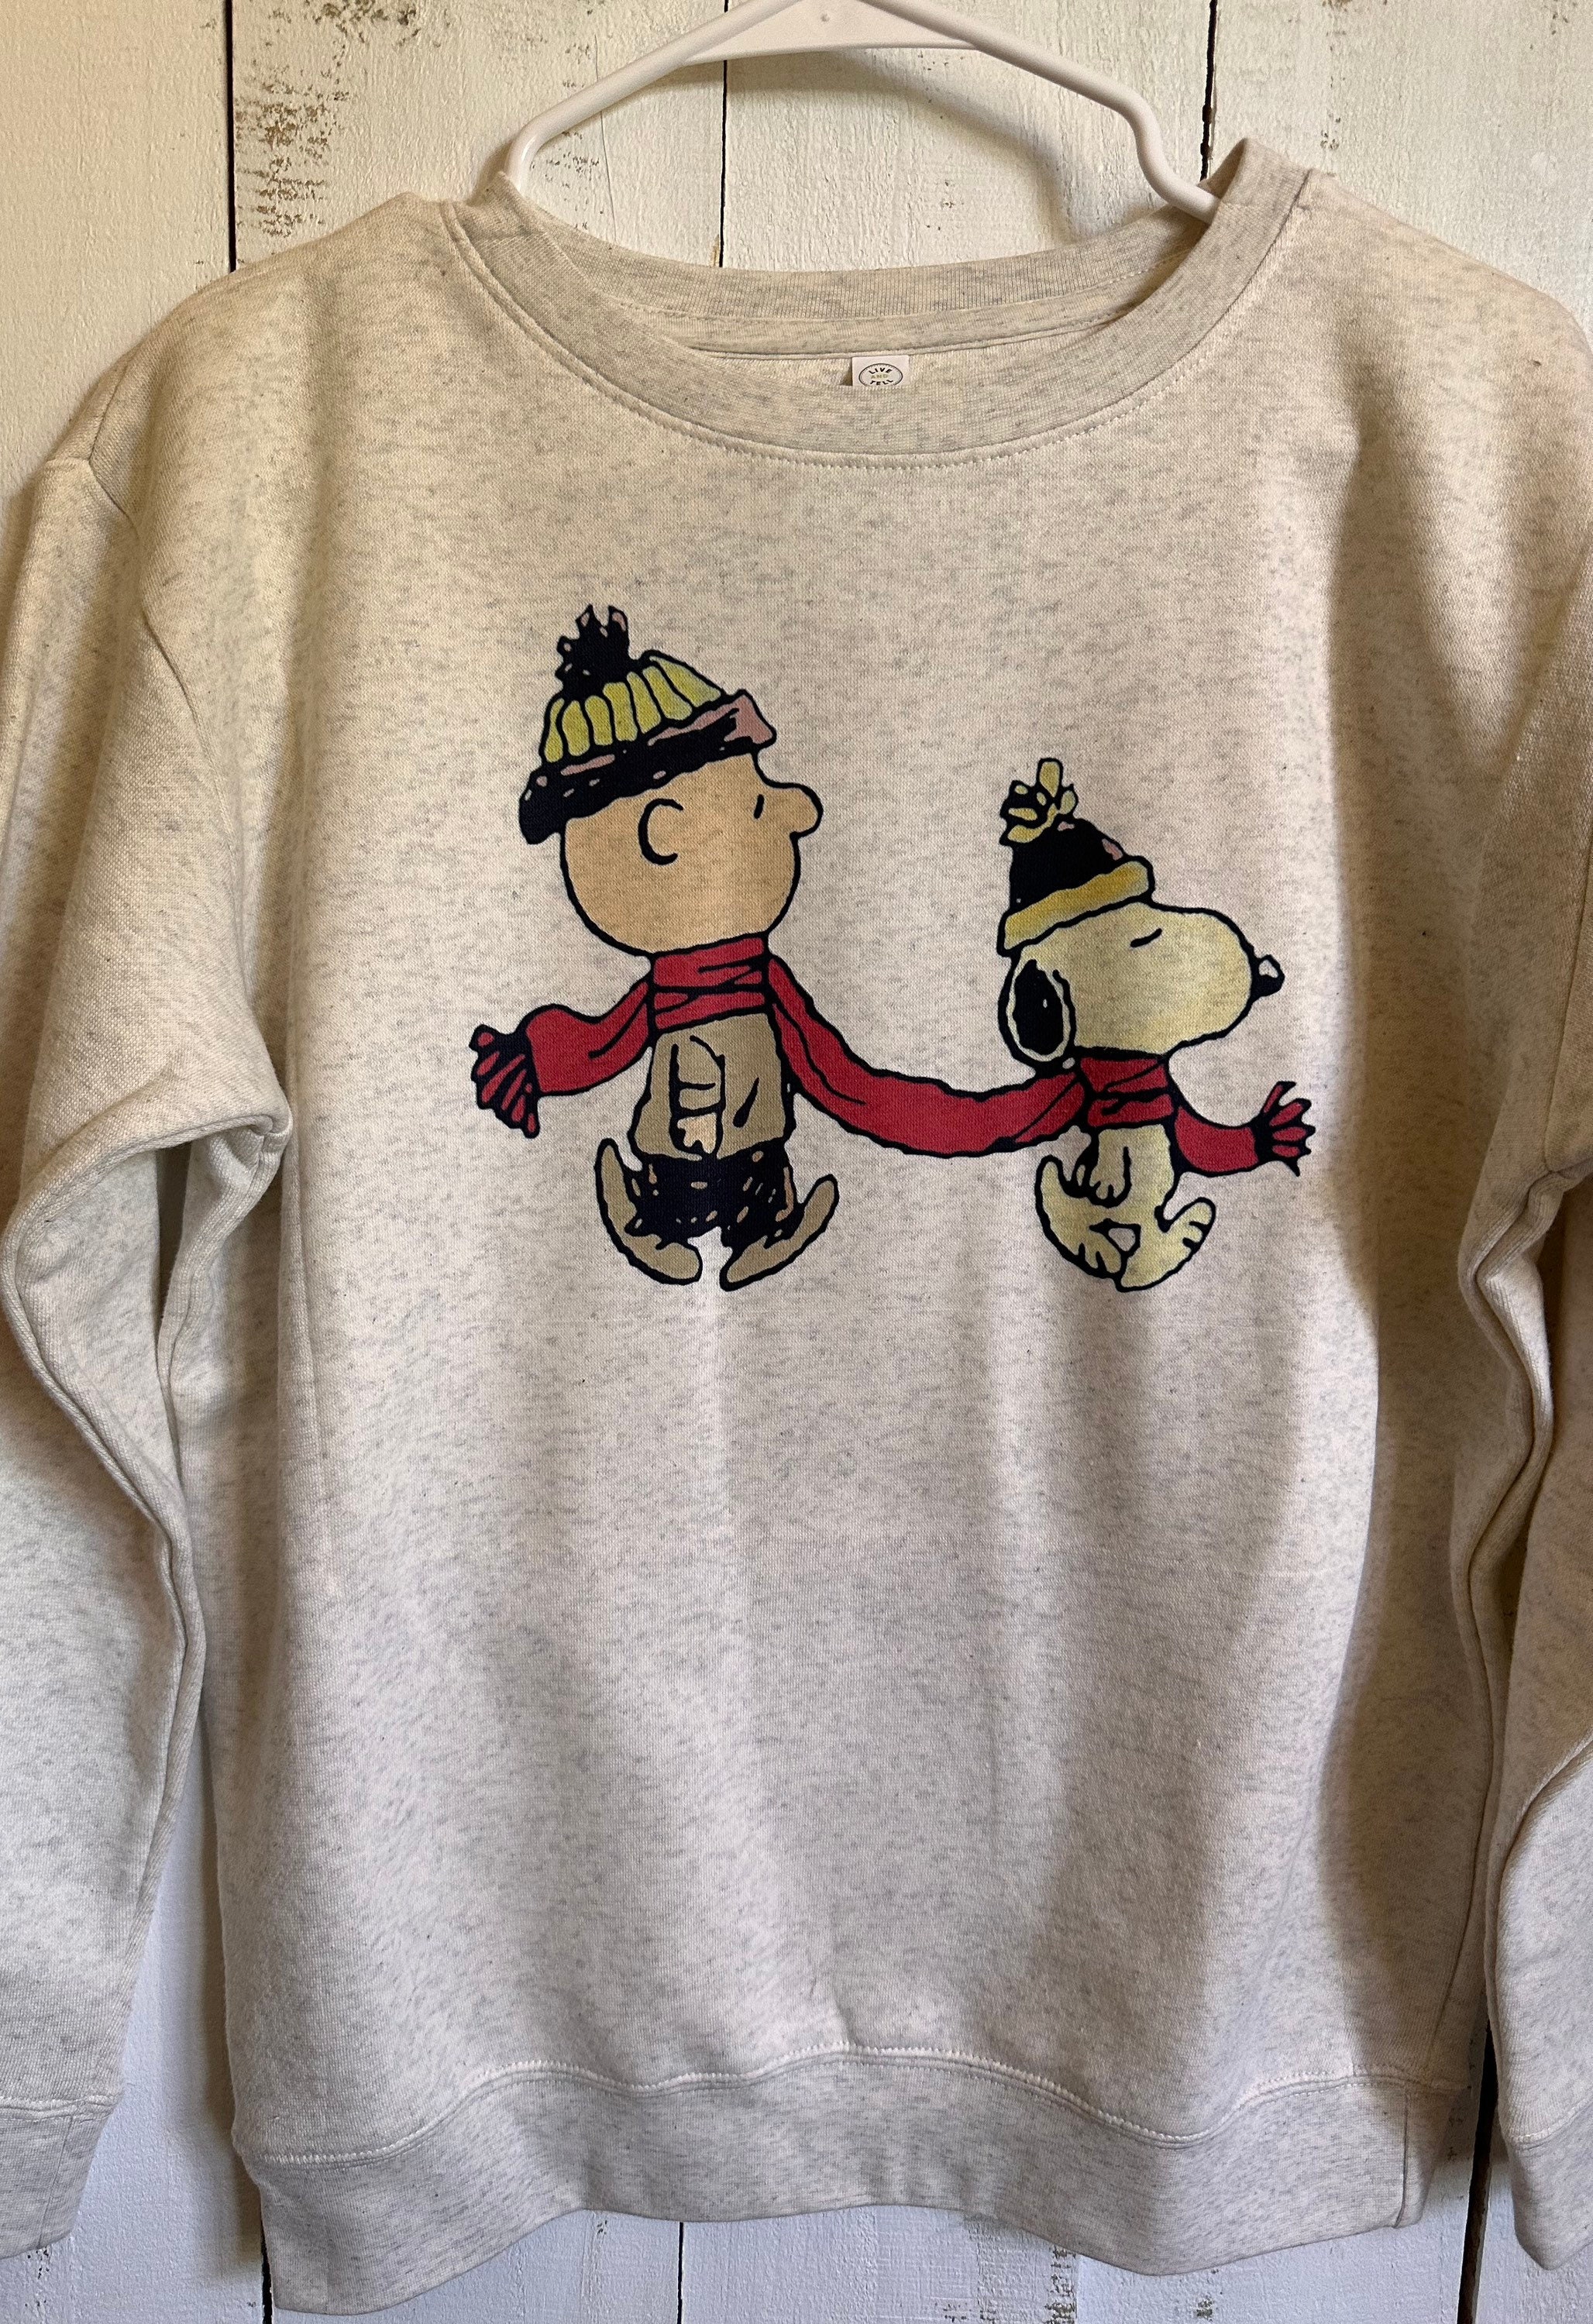 Discover Charlie Brown & Snoopy sweatshirts